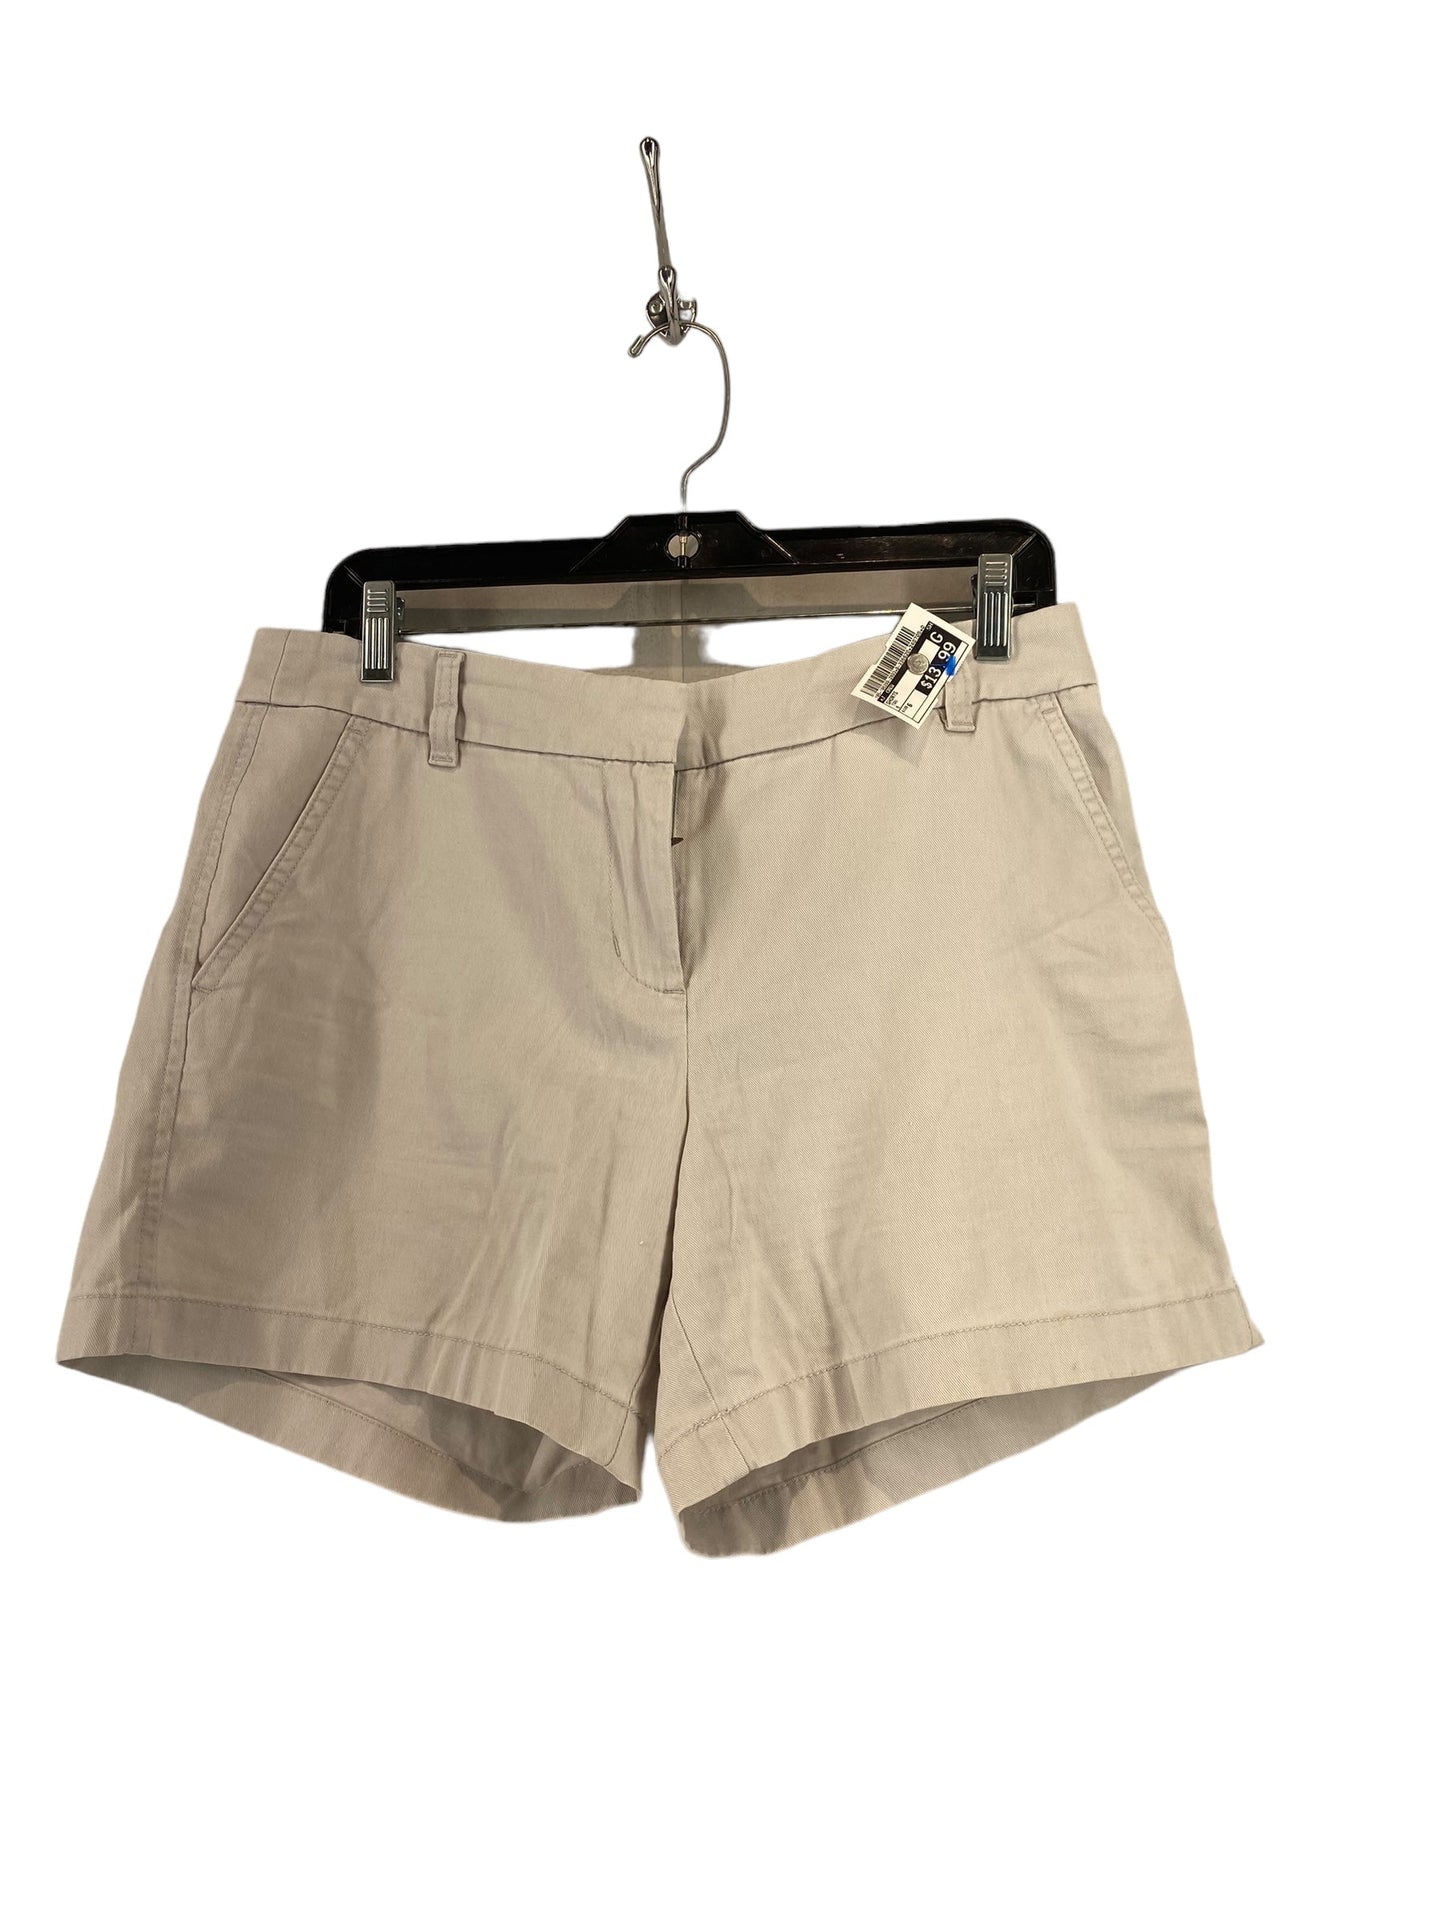 Tan Shorts J. Crew, Size 6